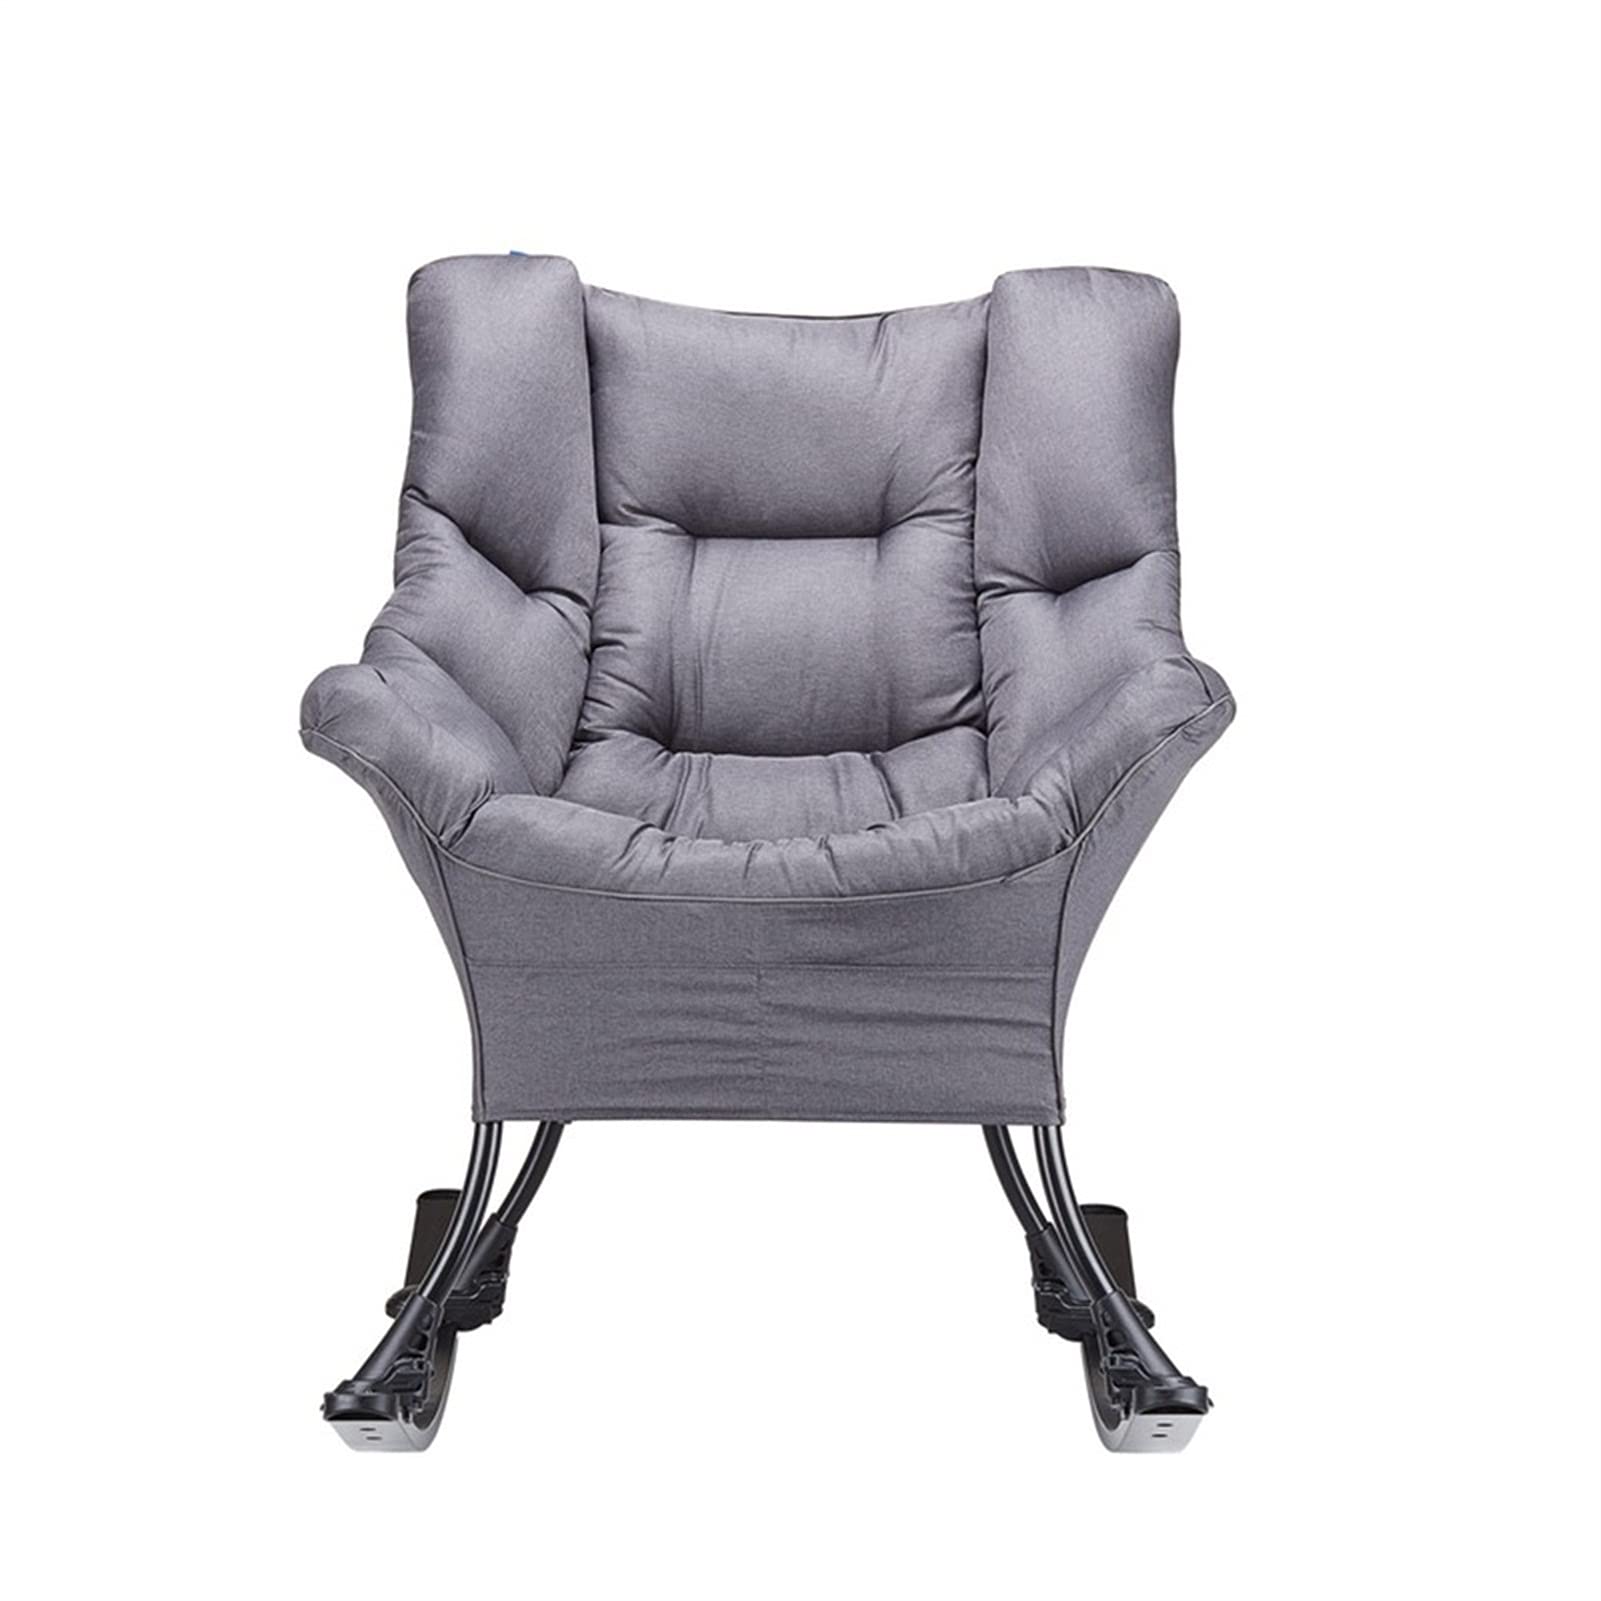 Amazon.com: luyiyi Lazy Couch Rocking Chair Bean Bag Tatami ...